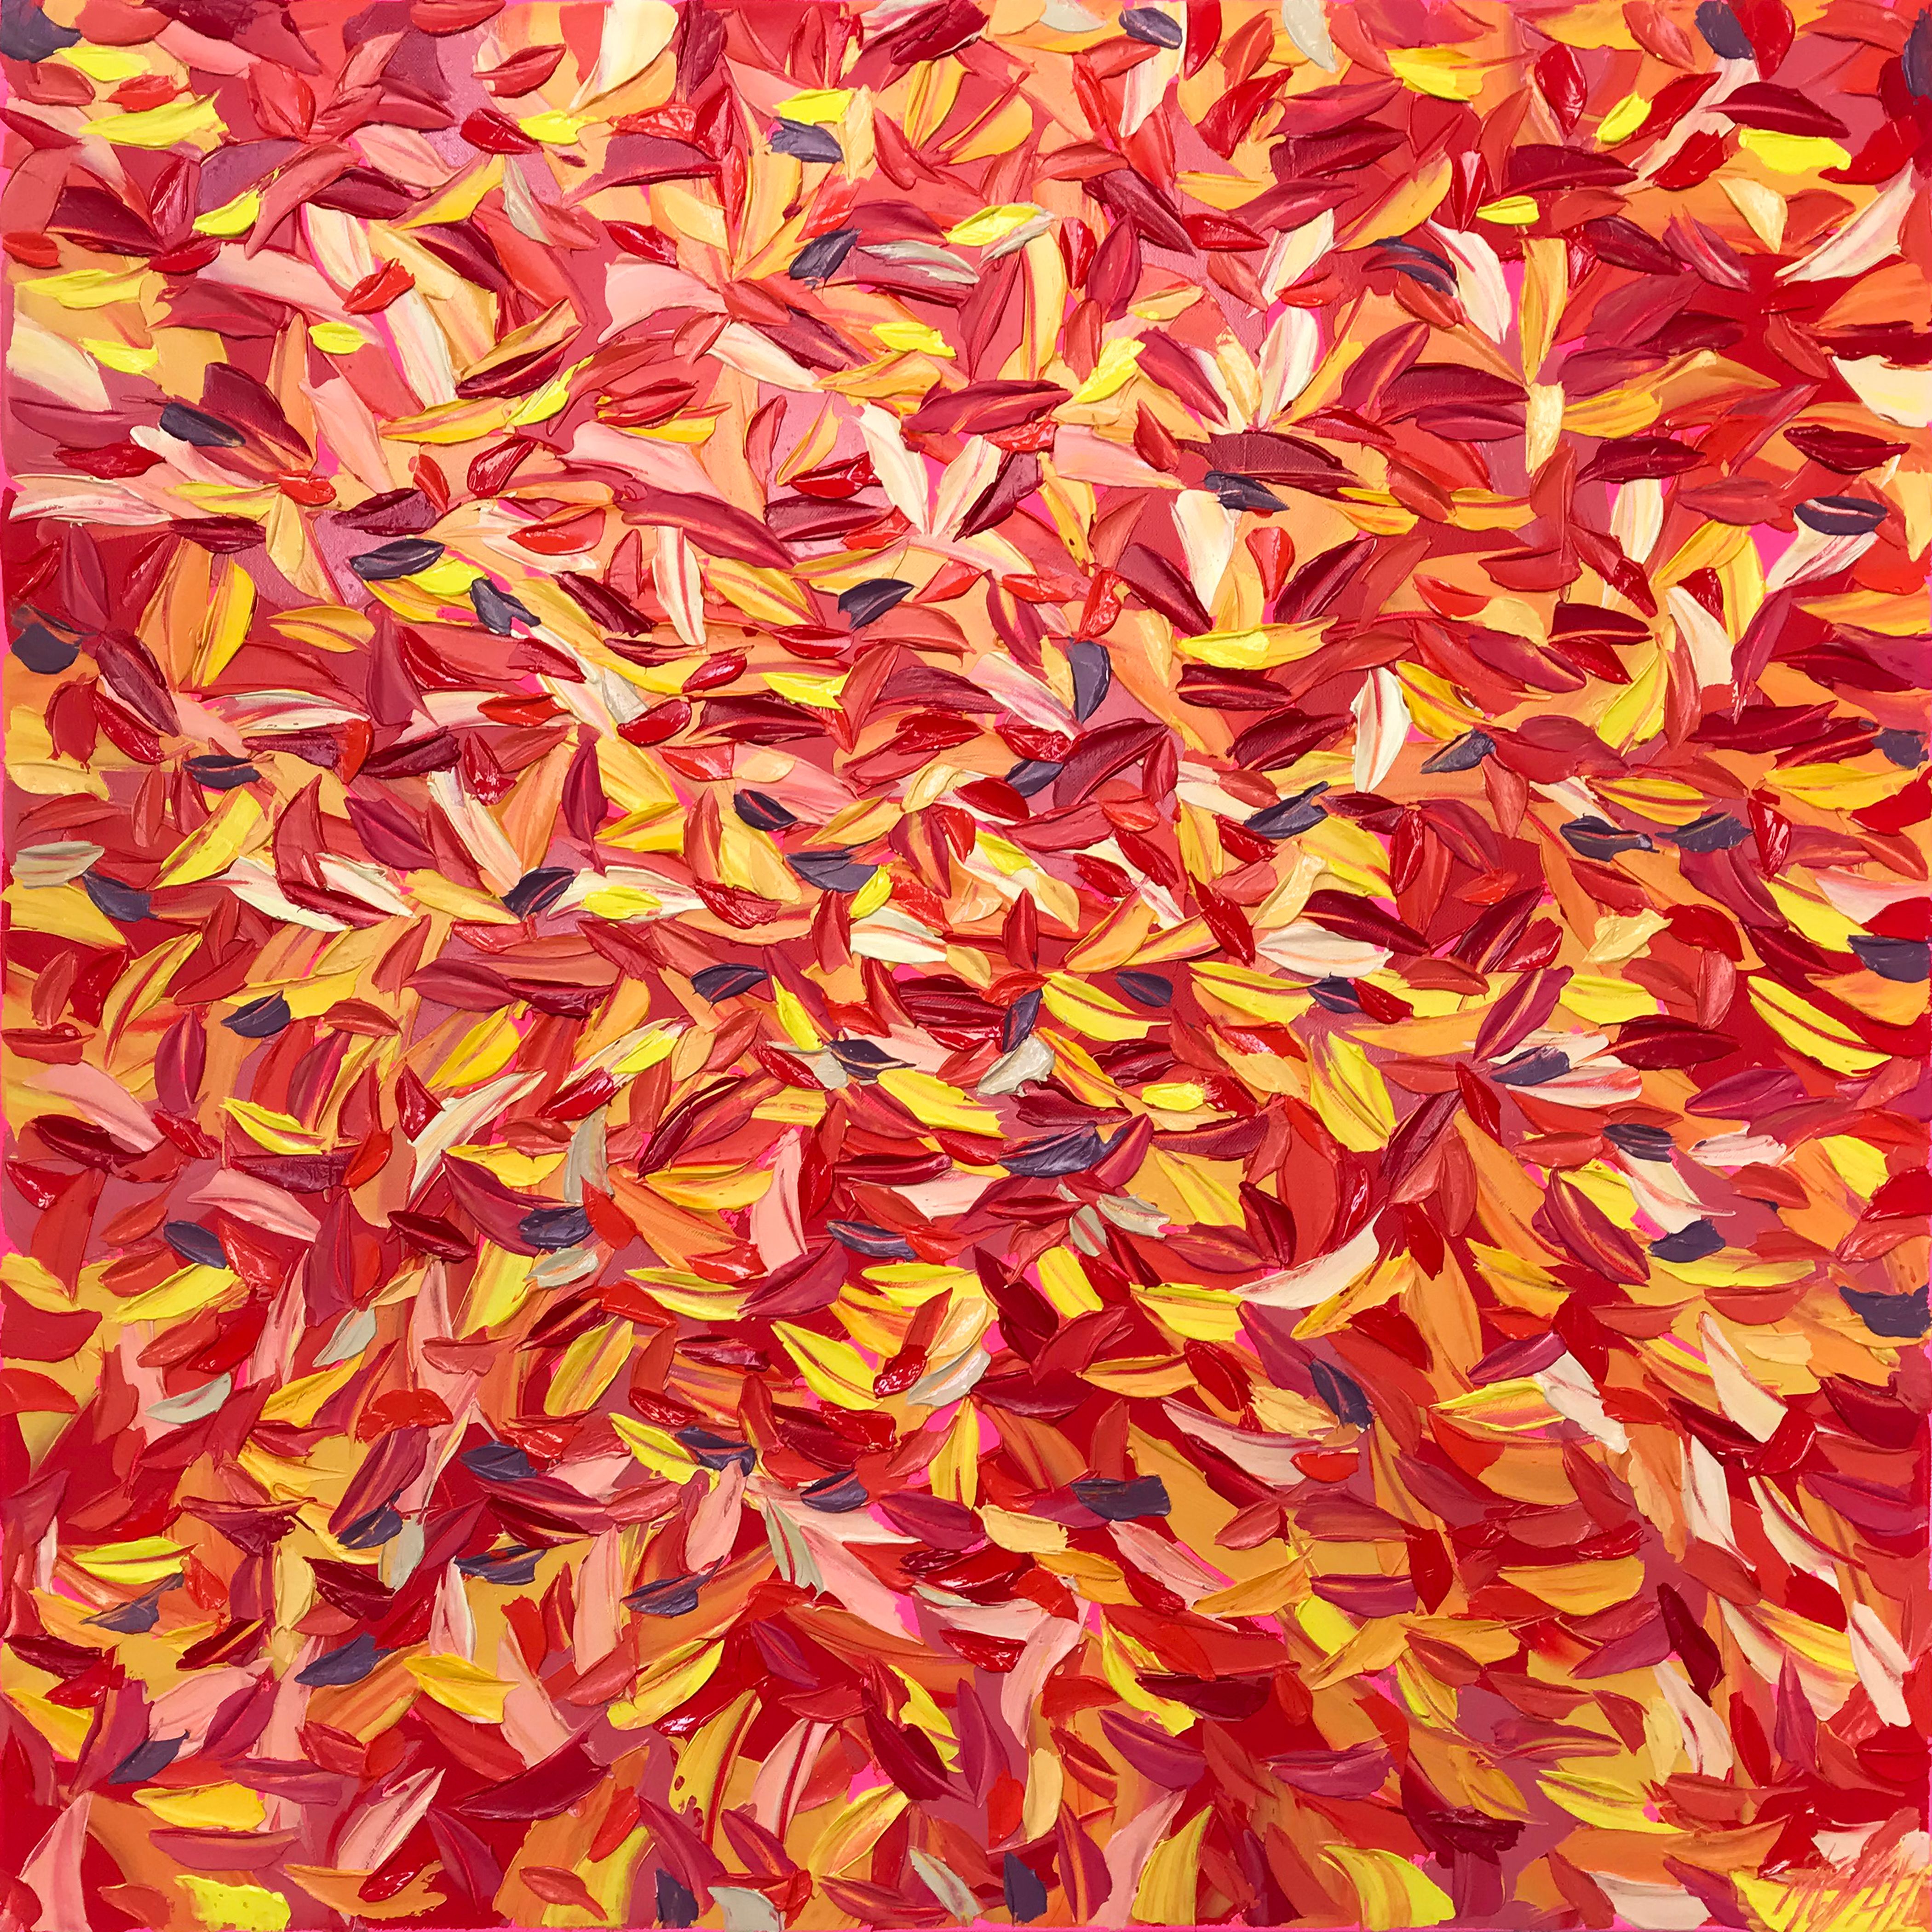 Pittura astratta di foglie colorate "Euphoria" di Oliver Messa